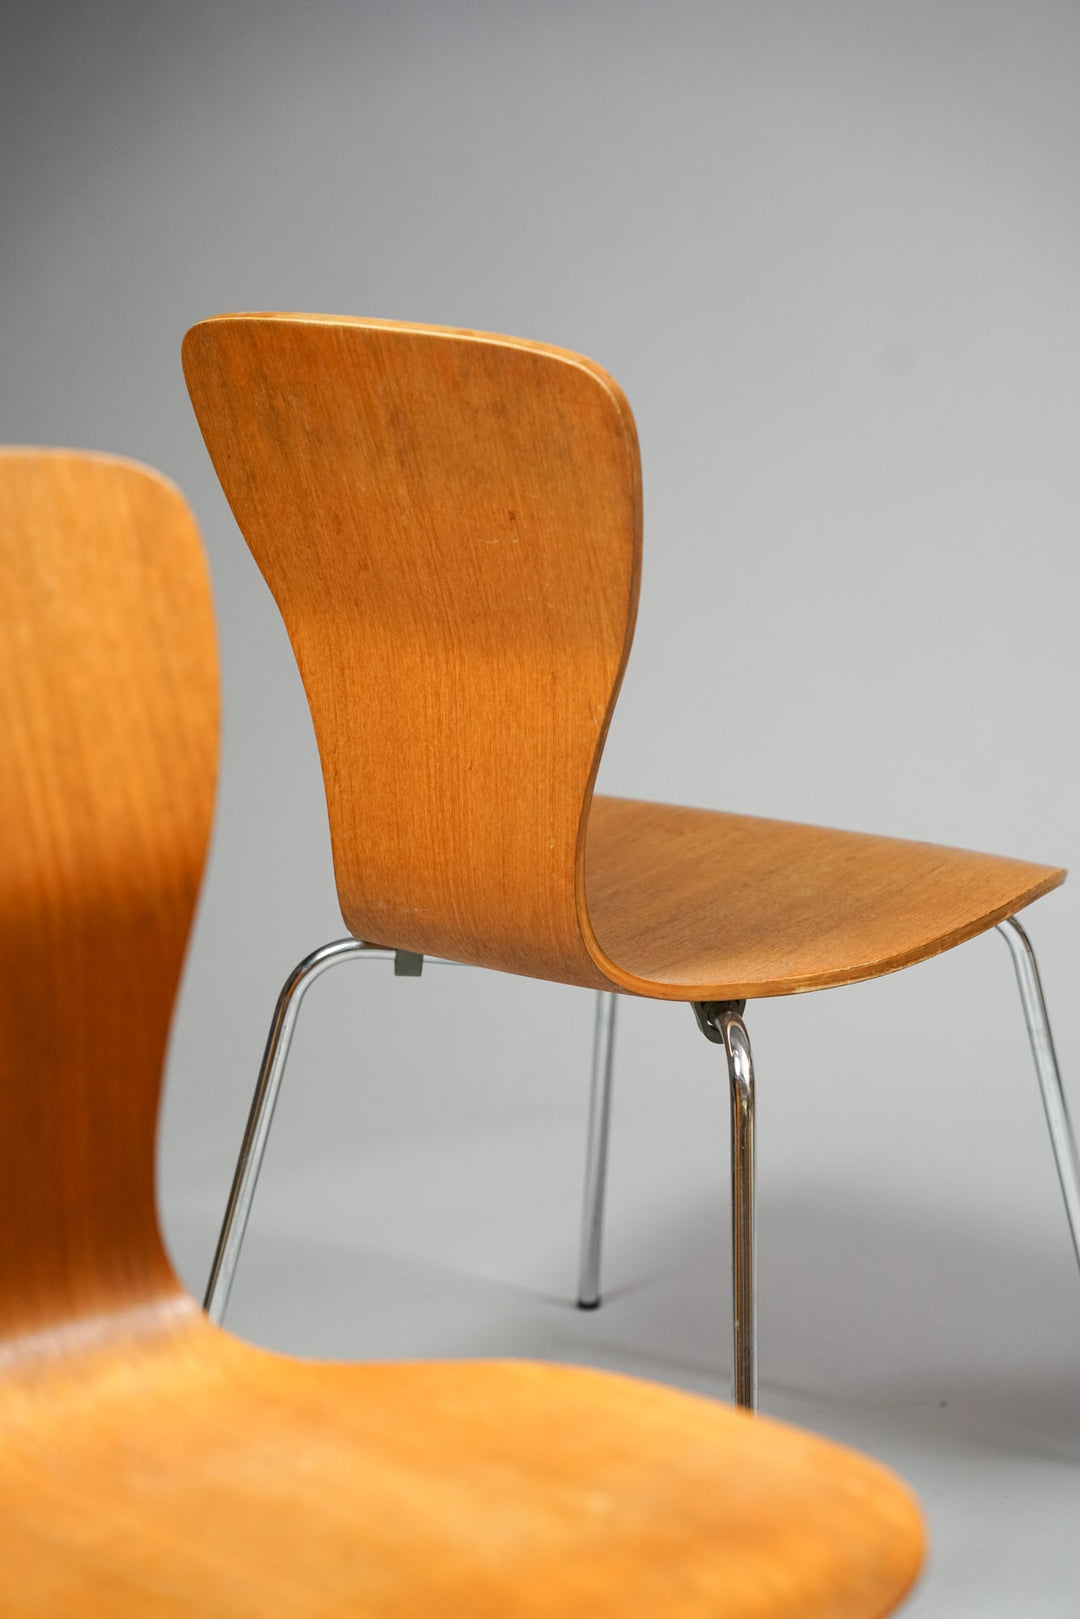 Nikke -tuolit 4 kpl, Tapio Wirkkala, Asko, 50-luku